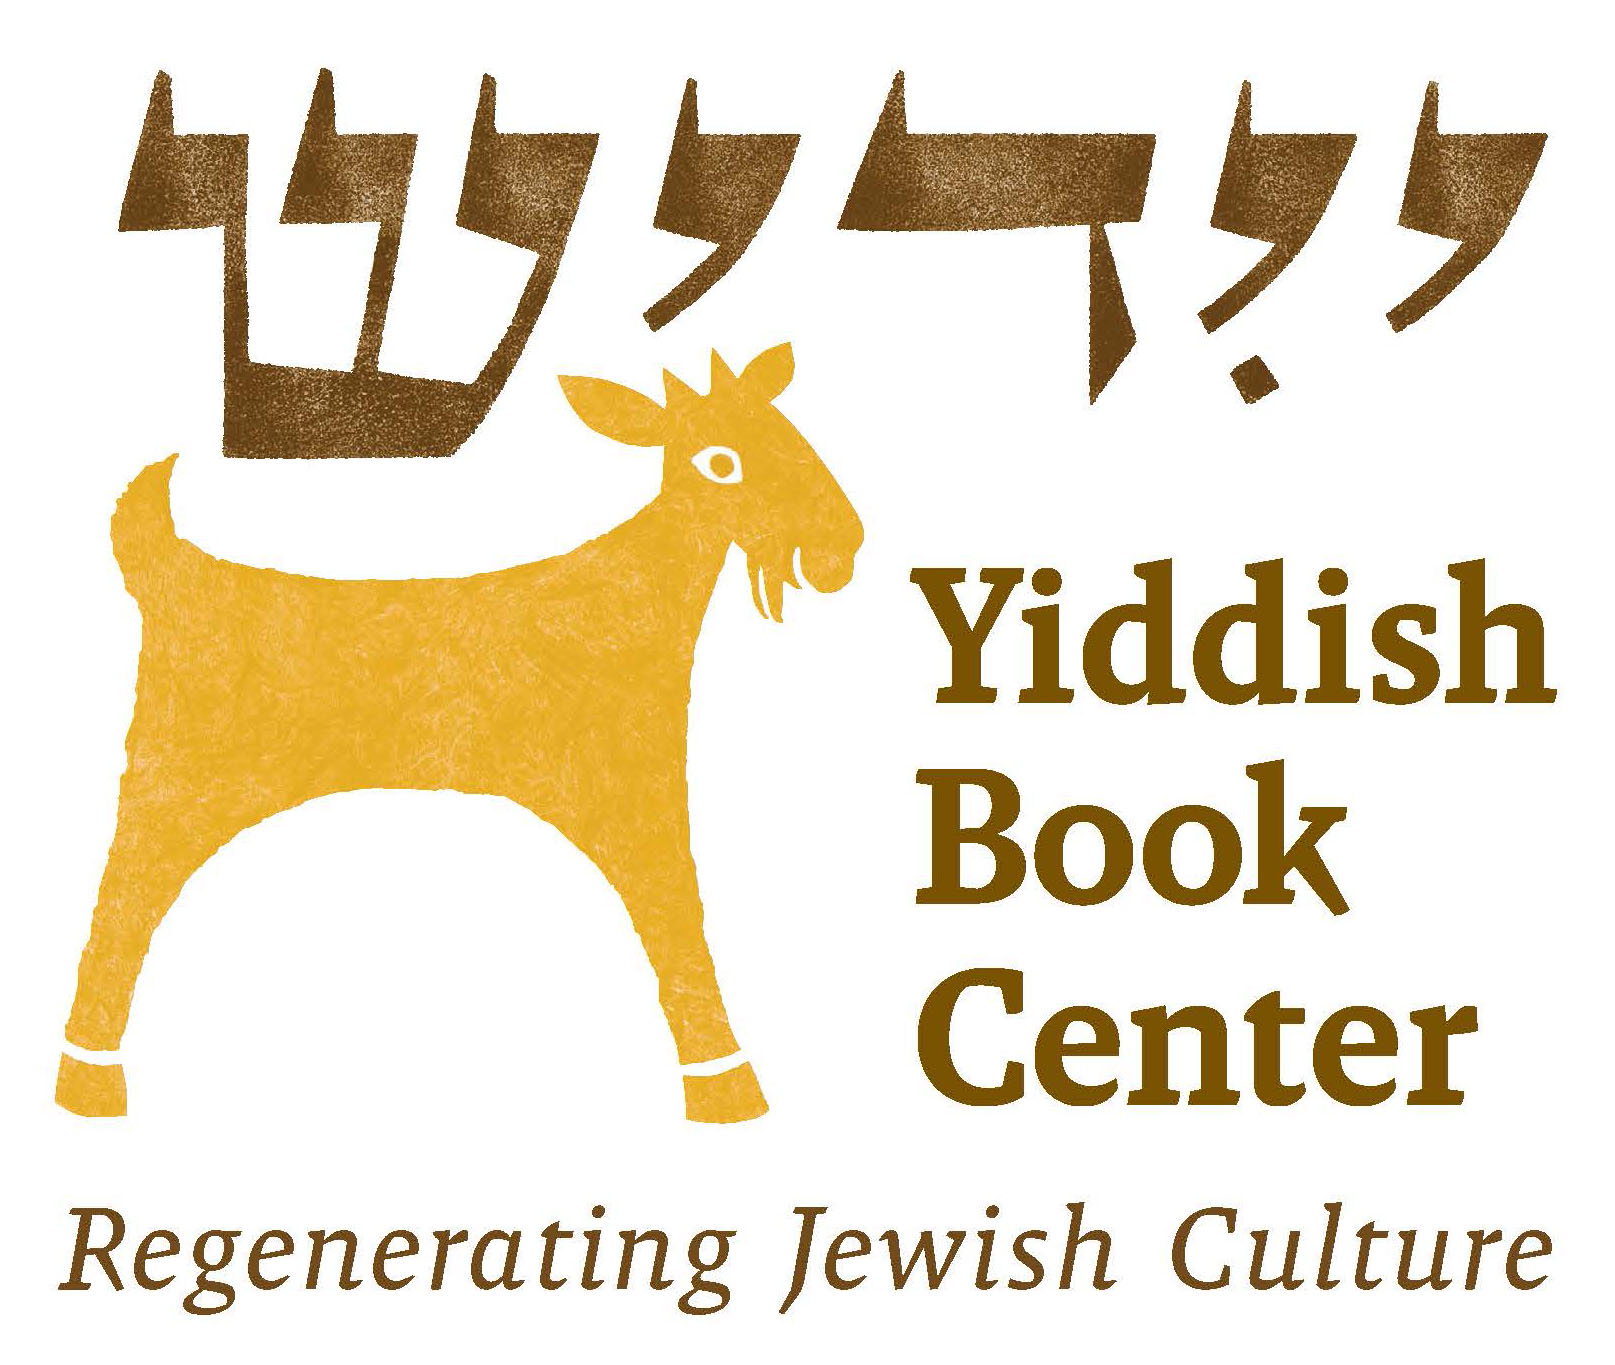 Yiddish Book Center logo with tagline